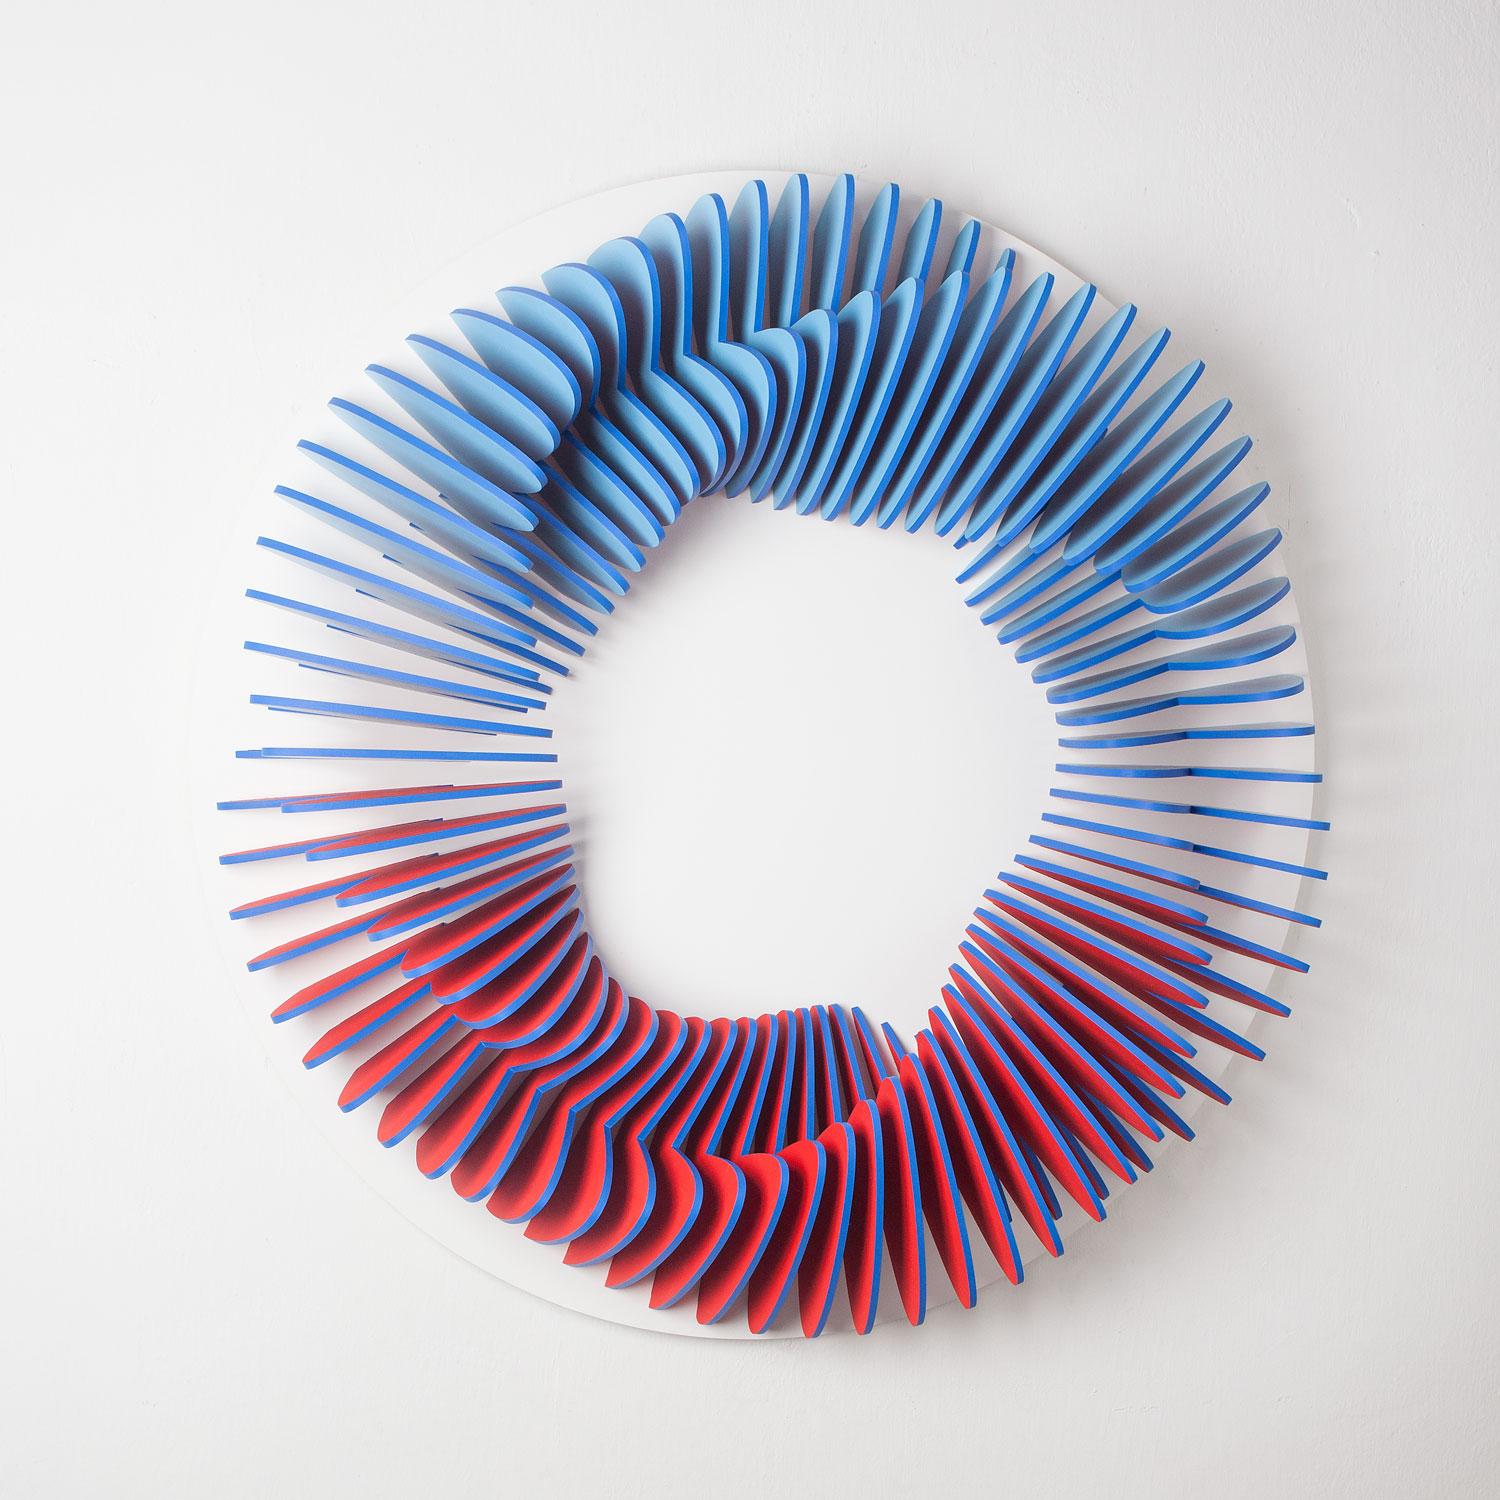 CC 100 - Blau-rote abstrakte geometrische 3D-Wandskulptur, kreisförmige Skulptur – Mixed Media Art von Anna Kruhelska